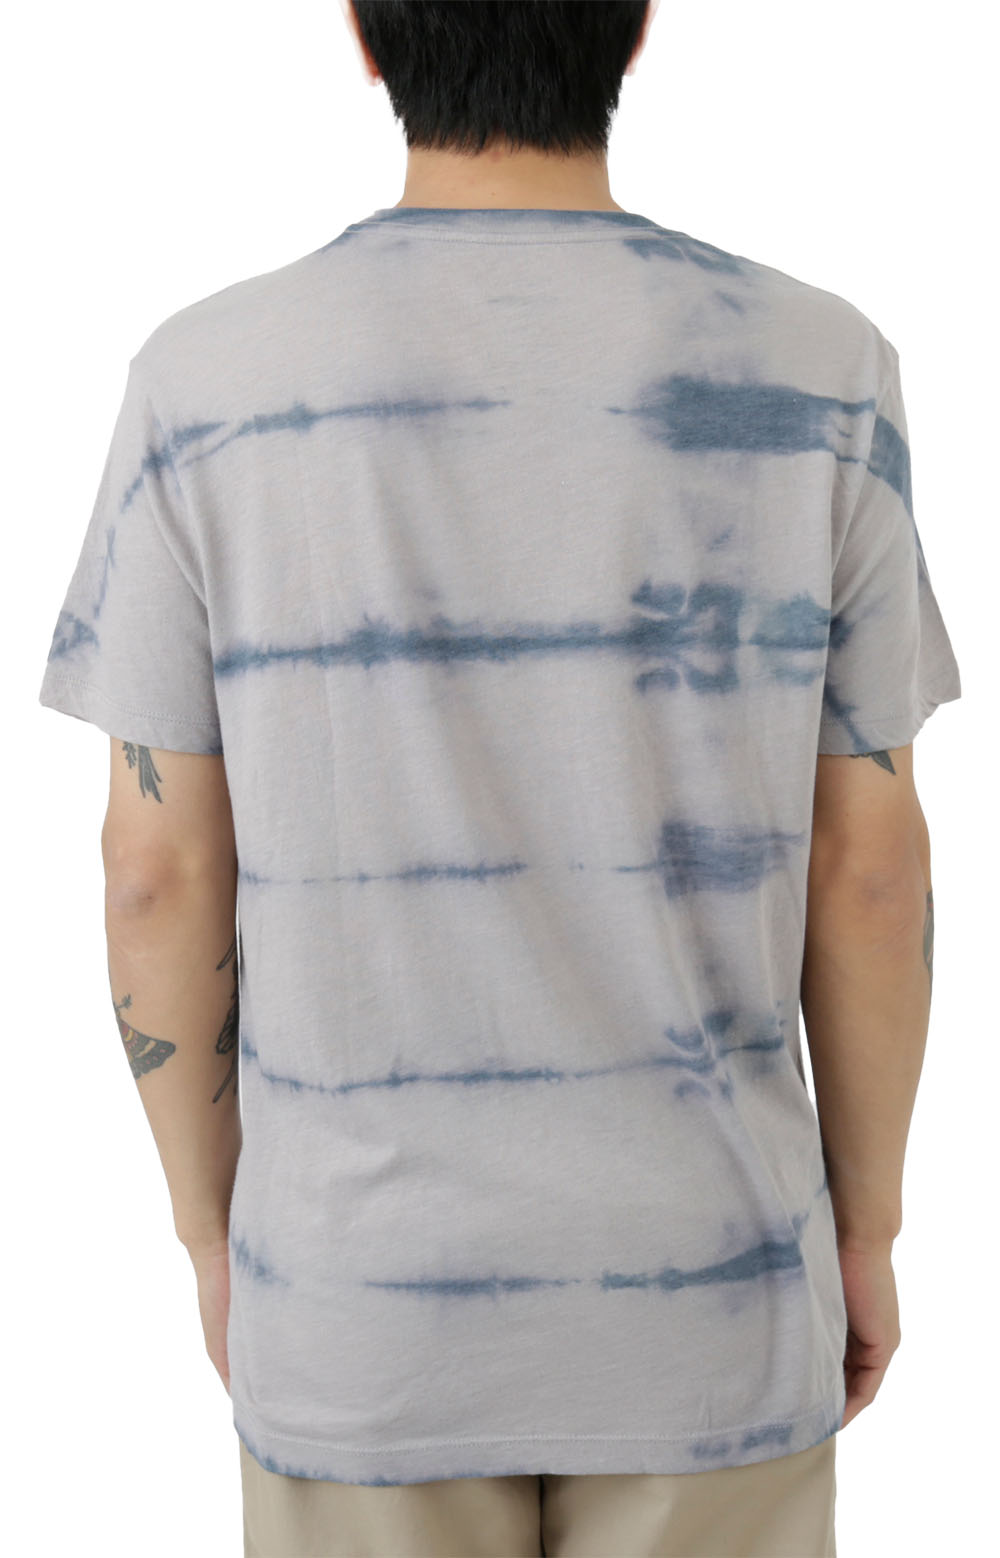 Quarantine Dreams T-Shirt - Grey/Blue Tie-Dye